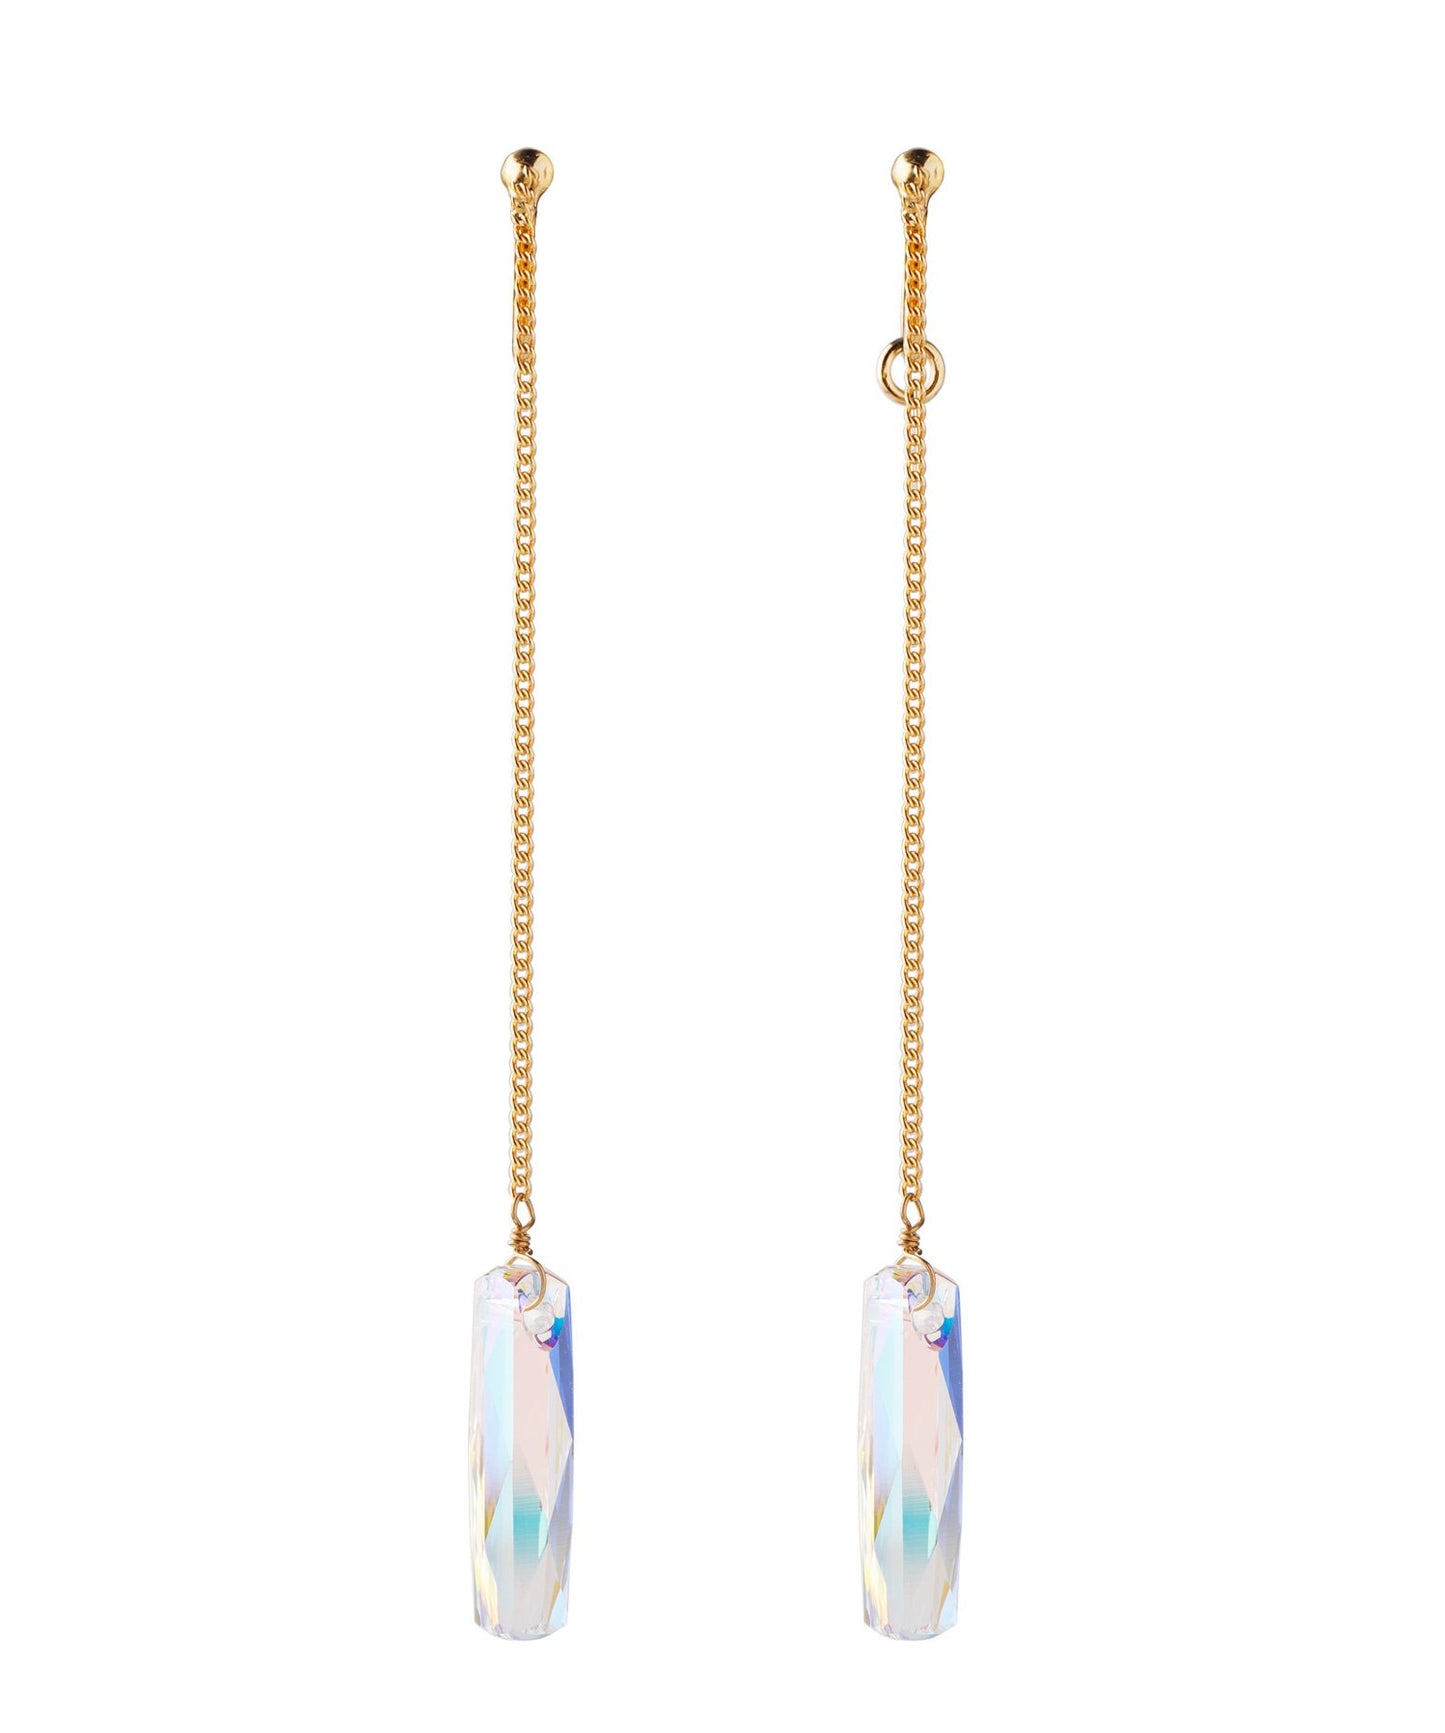 Crystal glass Long Clip On Earrings[B][Sheerchic]